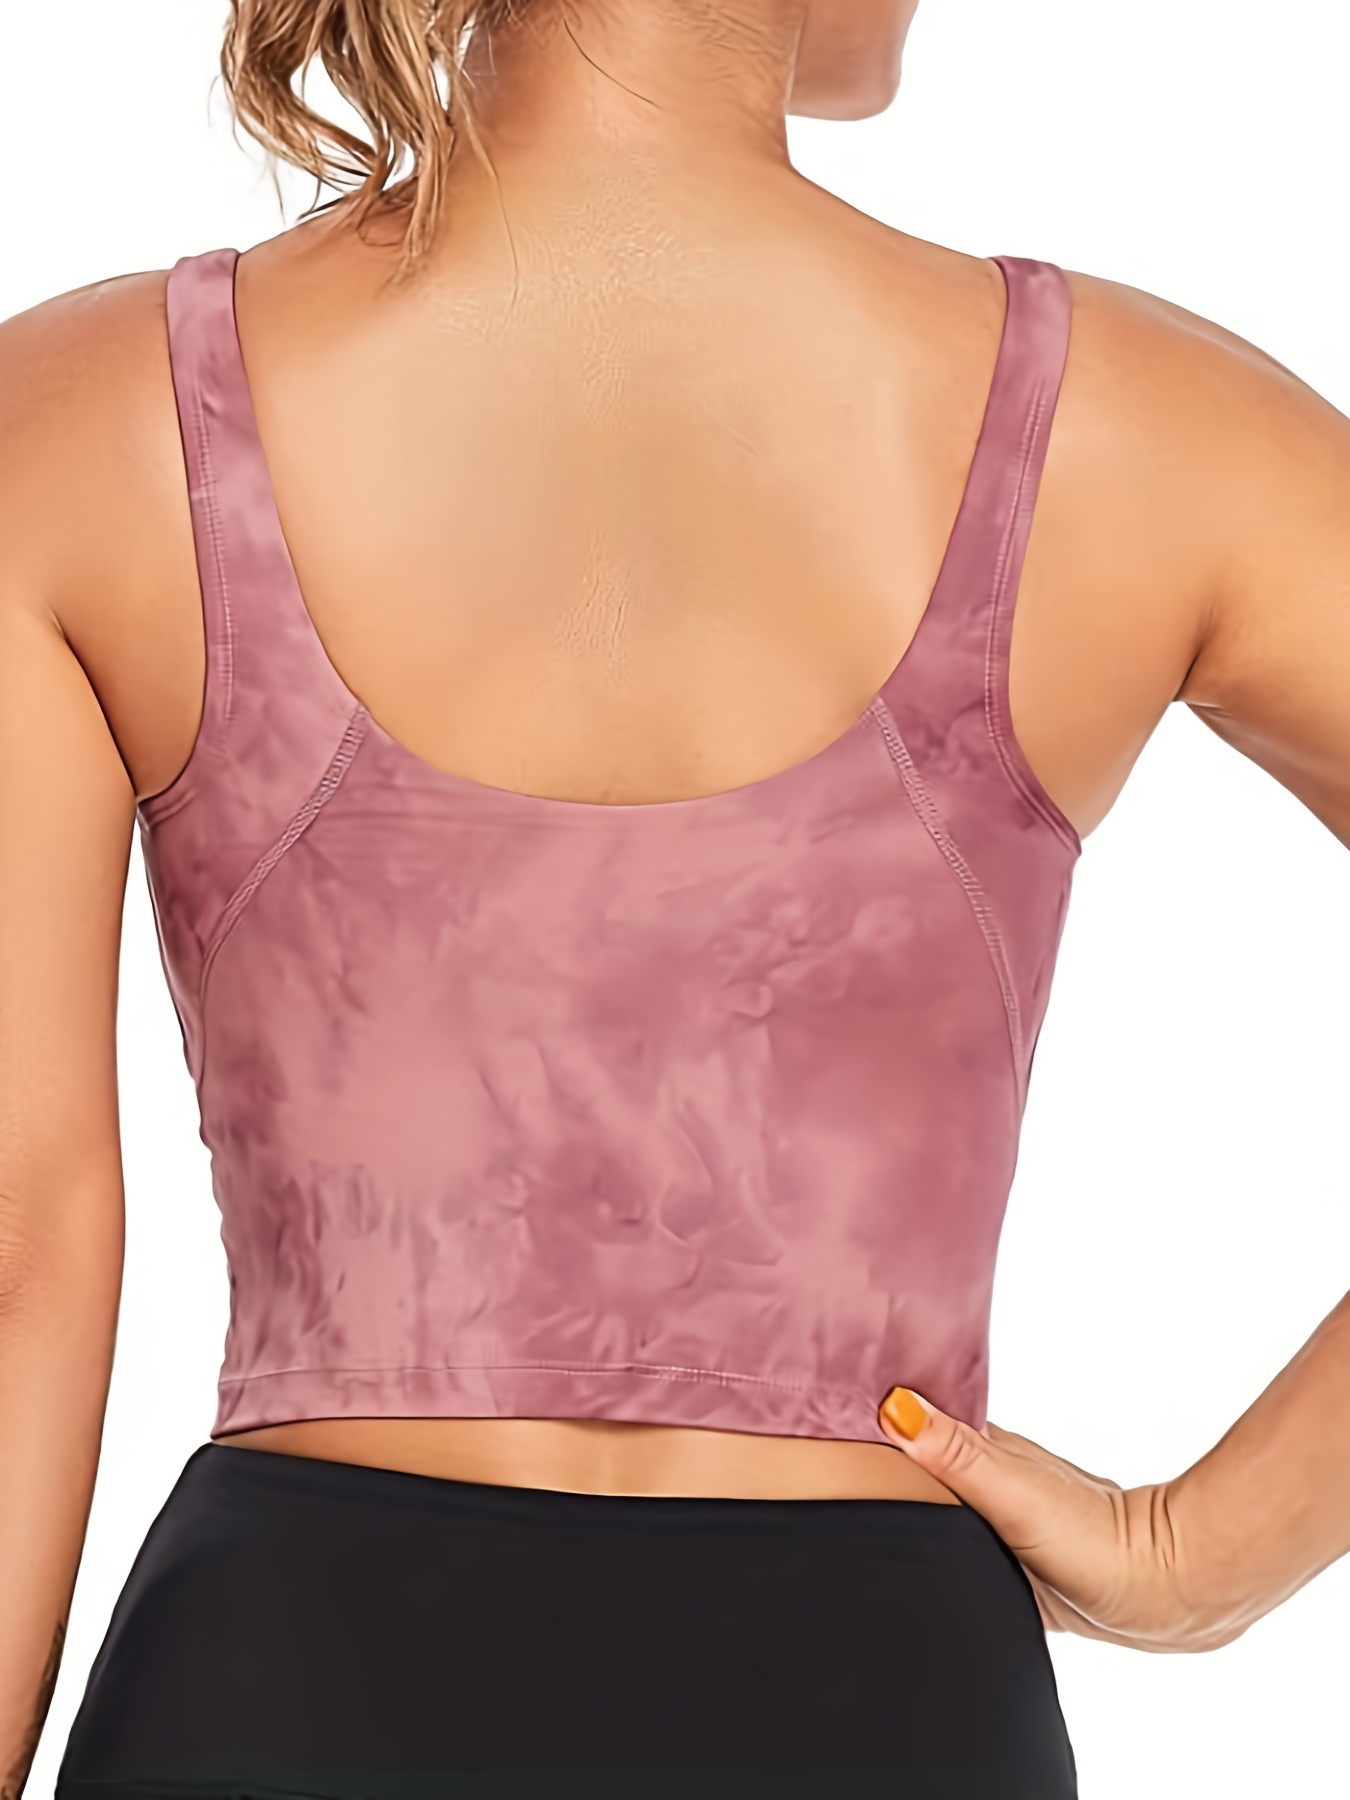 RQYYD Mesh Sports Bra for Women Longline Padded Bra Yoga Crop Tank Tops  Fitness Workout Running Top Purple L